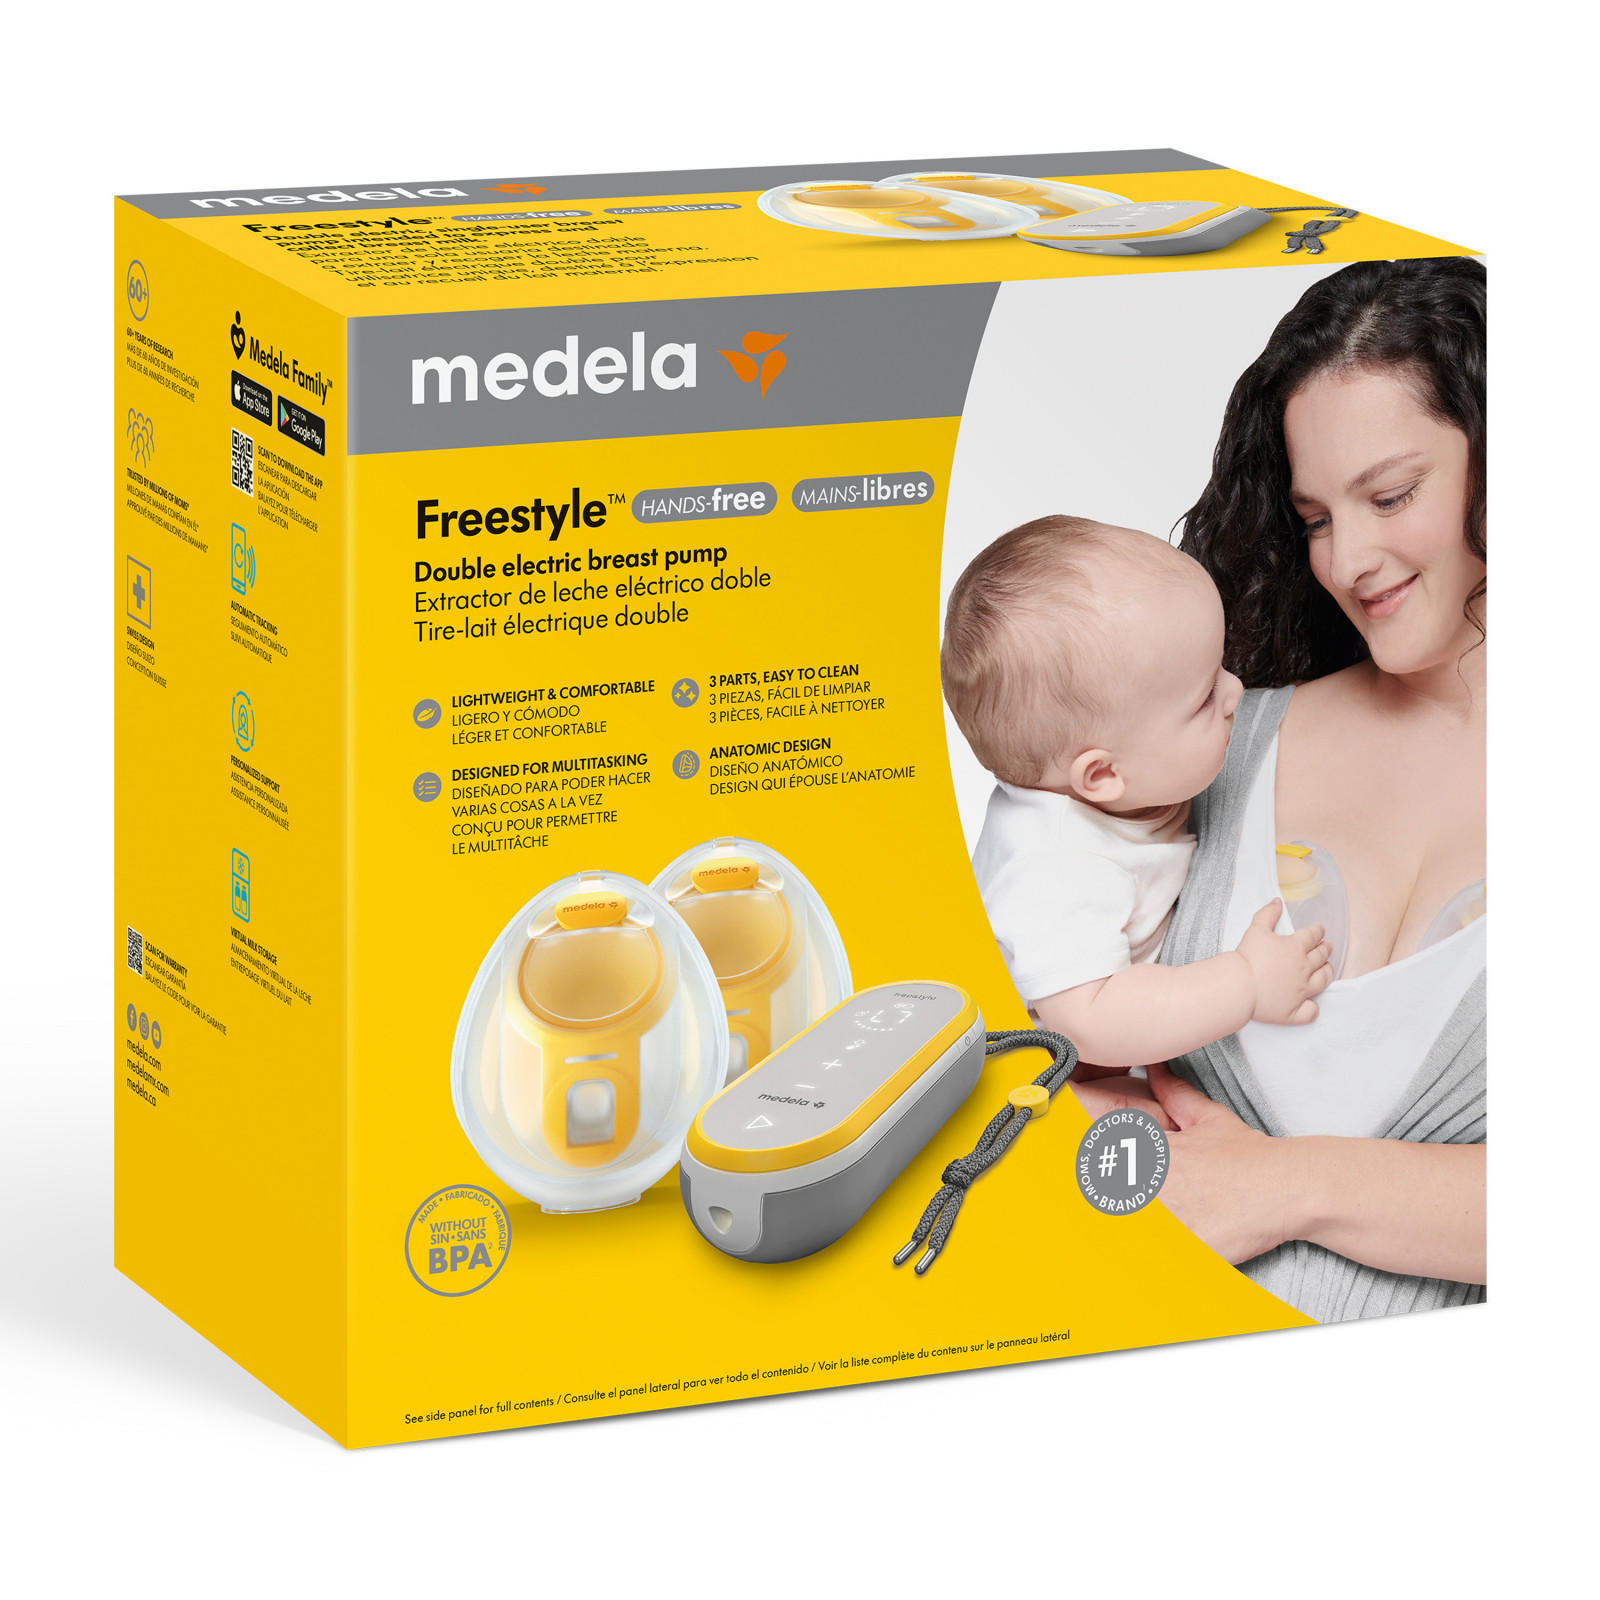 Medela - Freestyle Hands-free Breast Pump